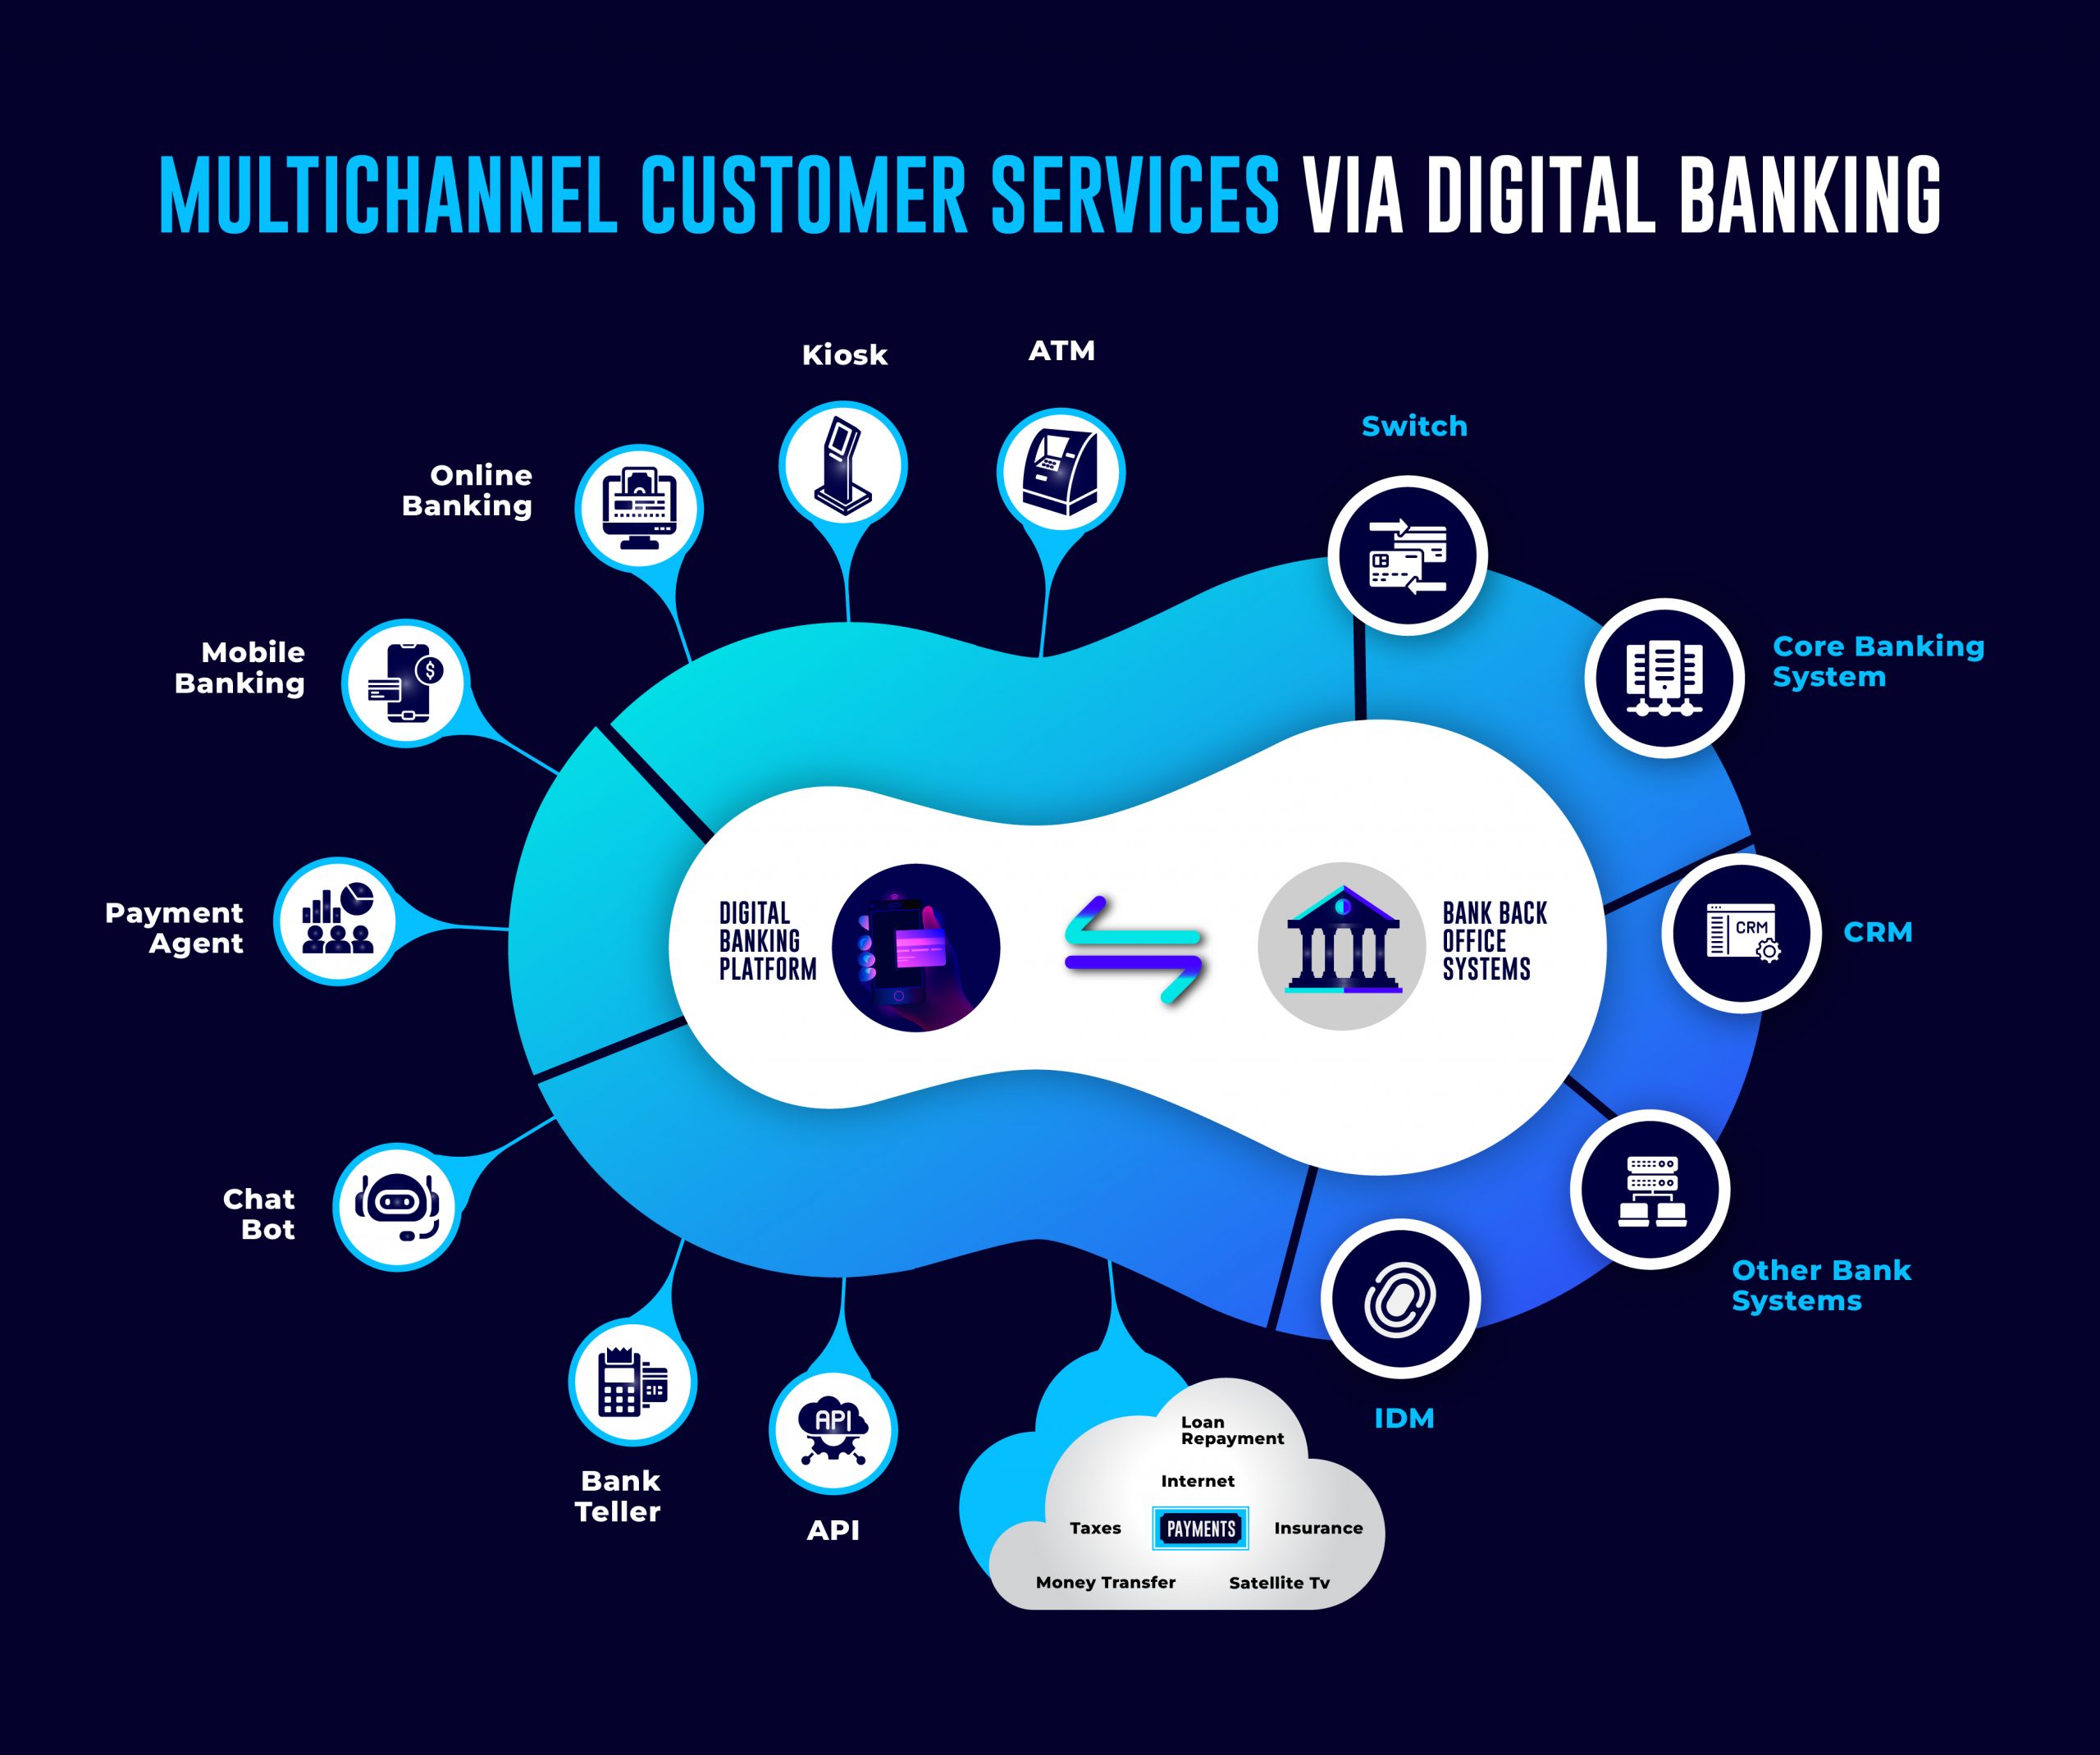 Multichannel Customer Services via Digital Banking